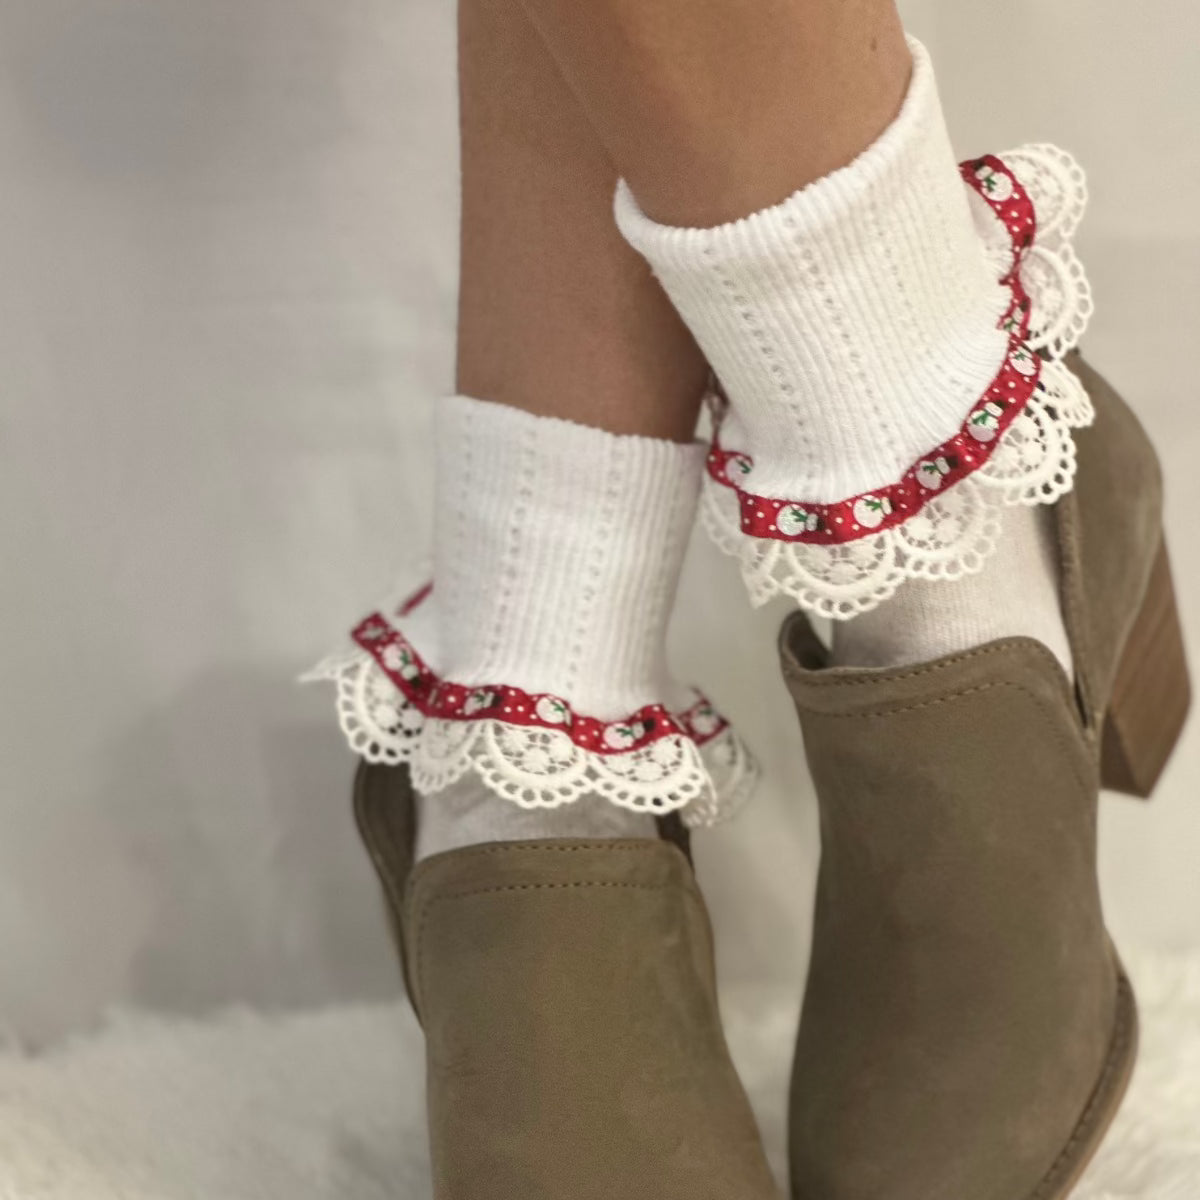 snowman CHristmas gift socks women, cool lace socks ladies